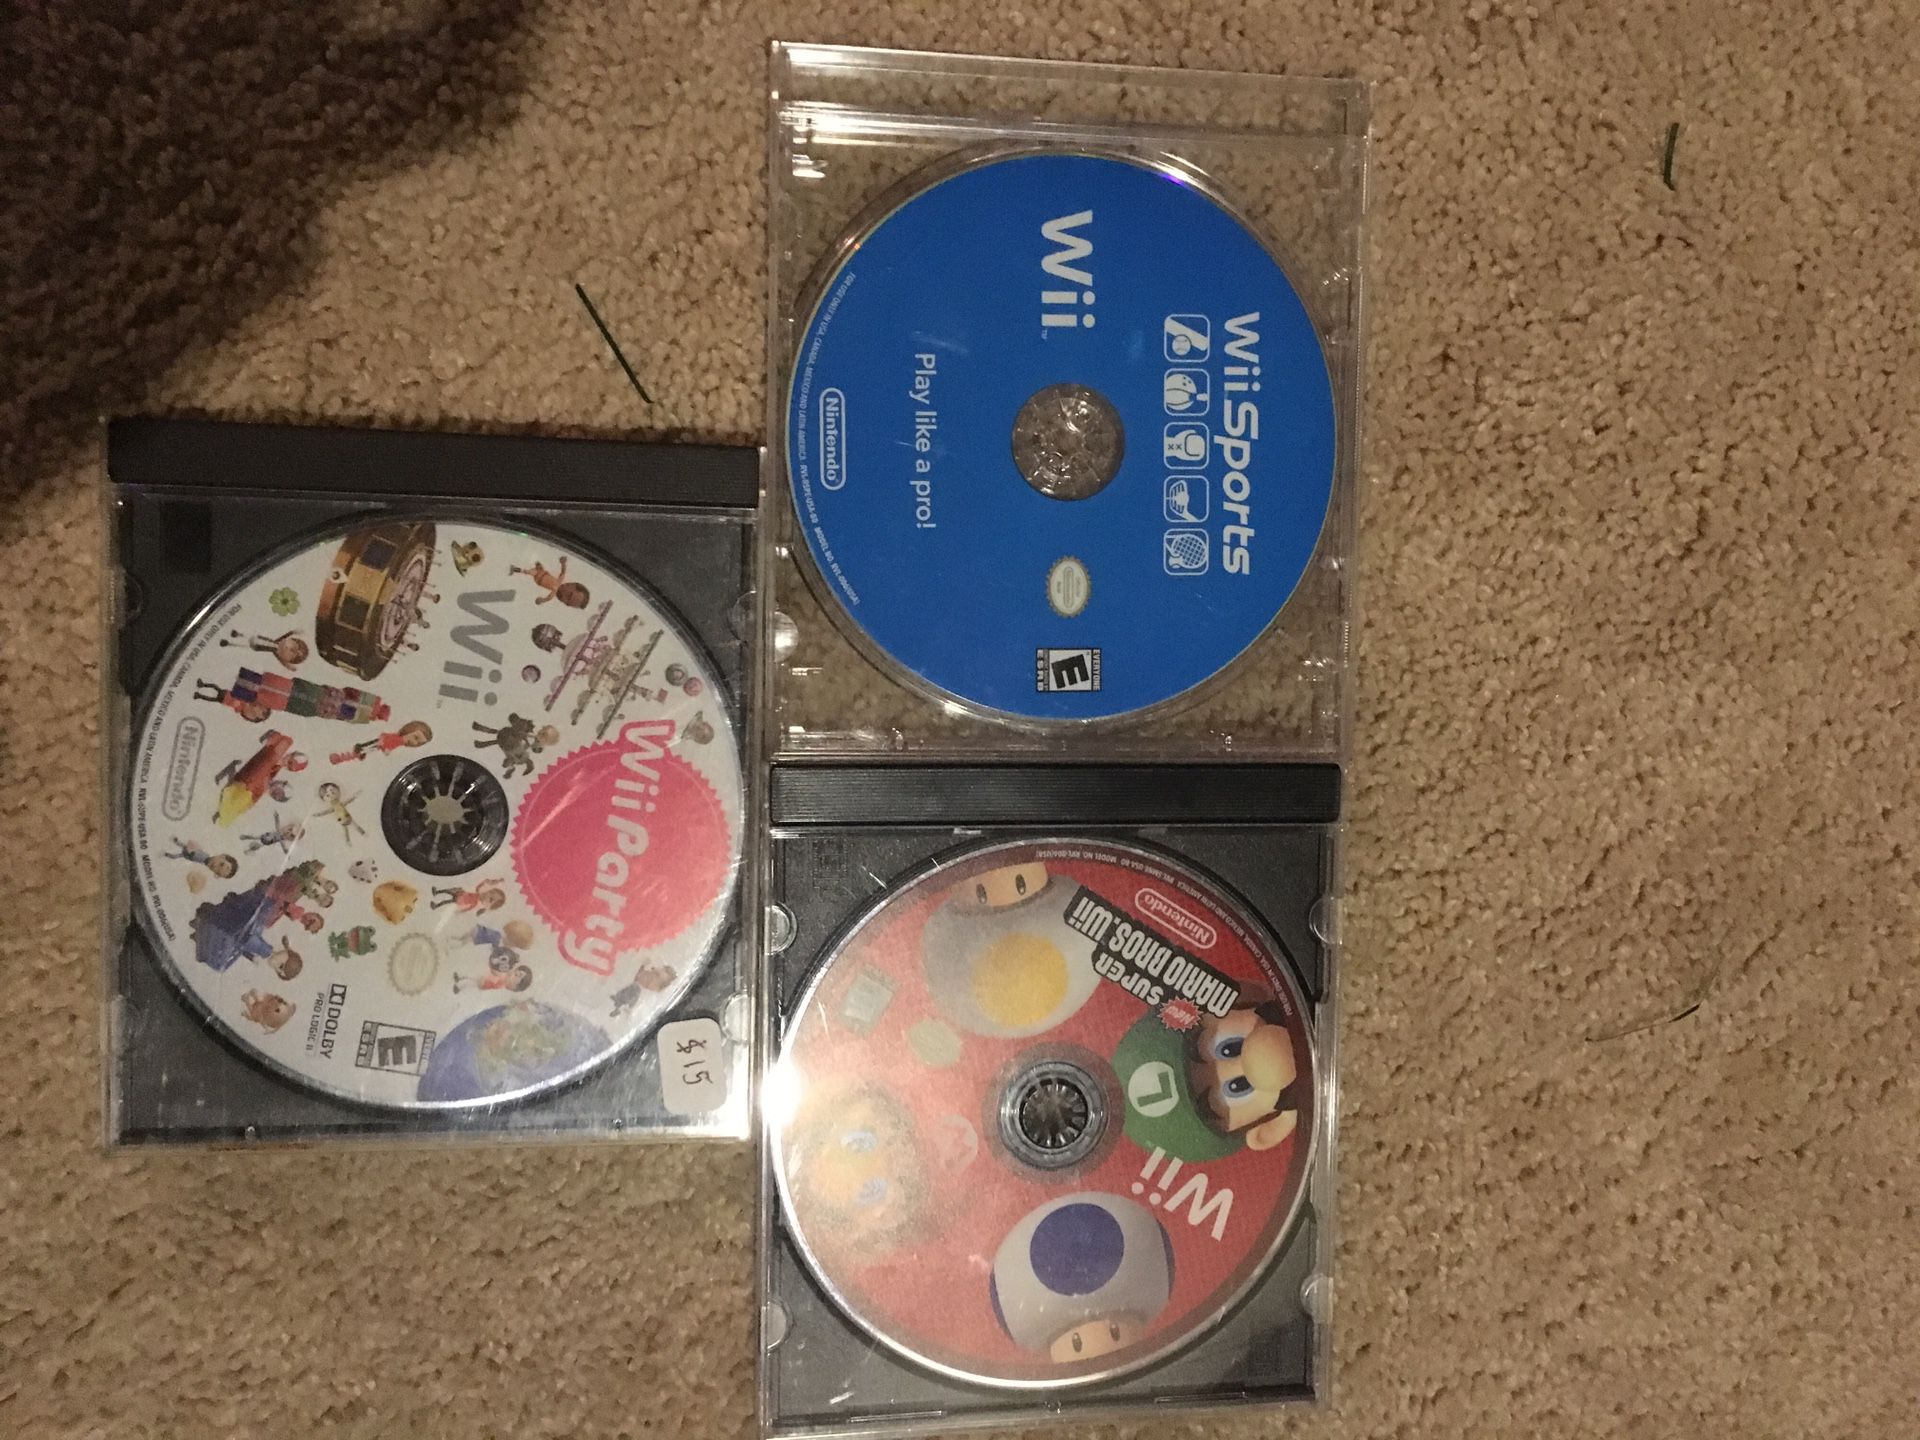 3 popular Wii games